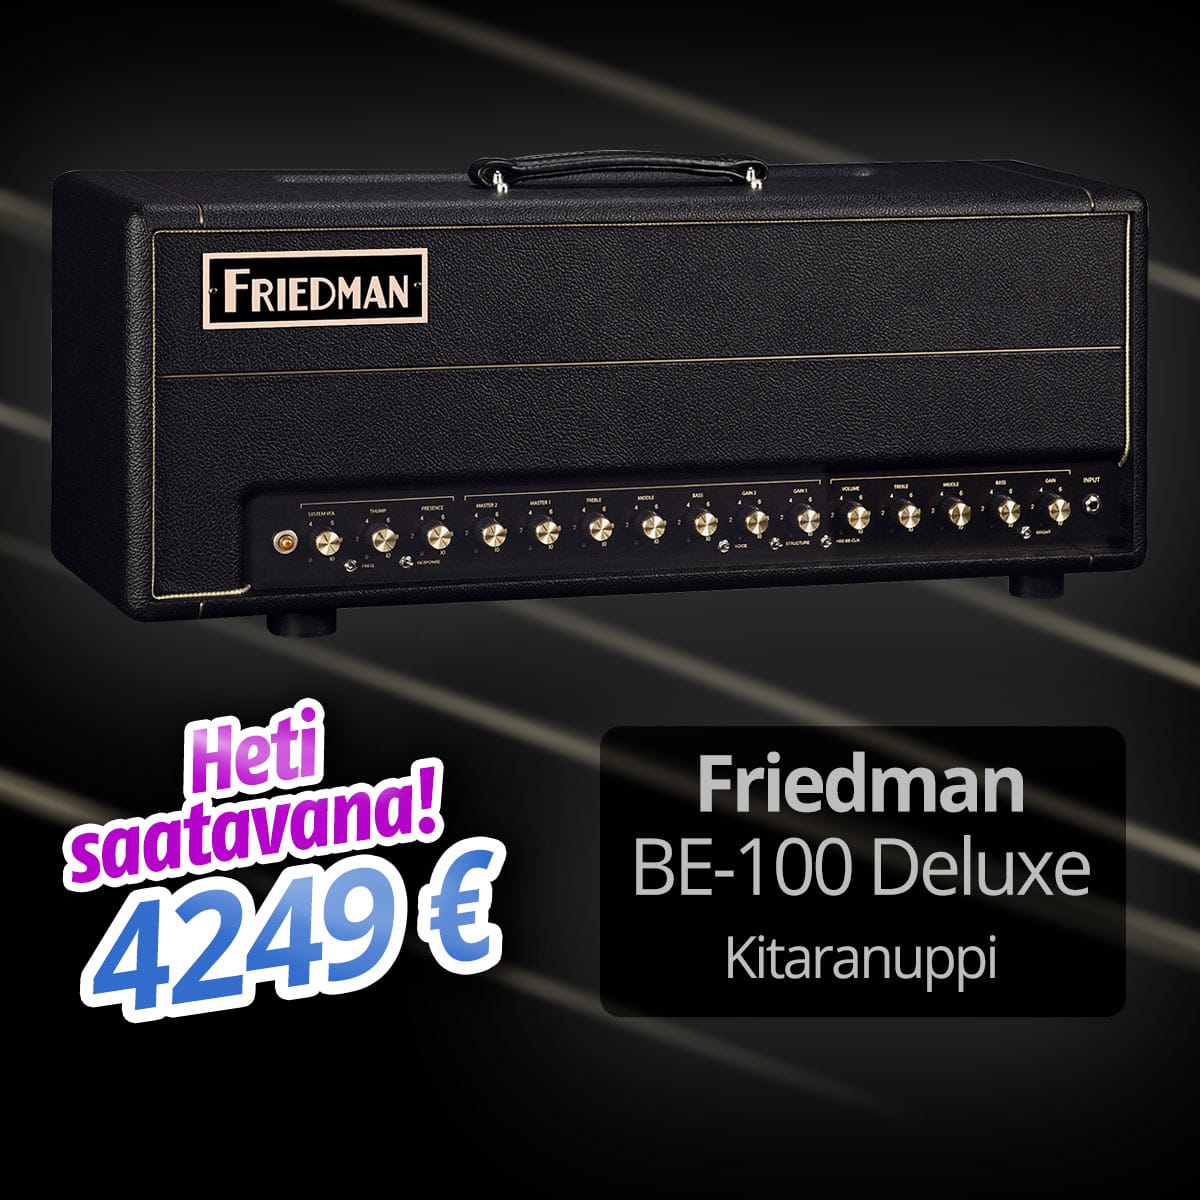 Friedman BE-100 Deluxe kitaranuppi - 4249 € - Heti saatavana!